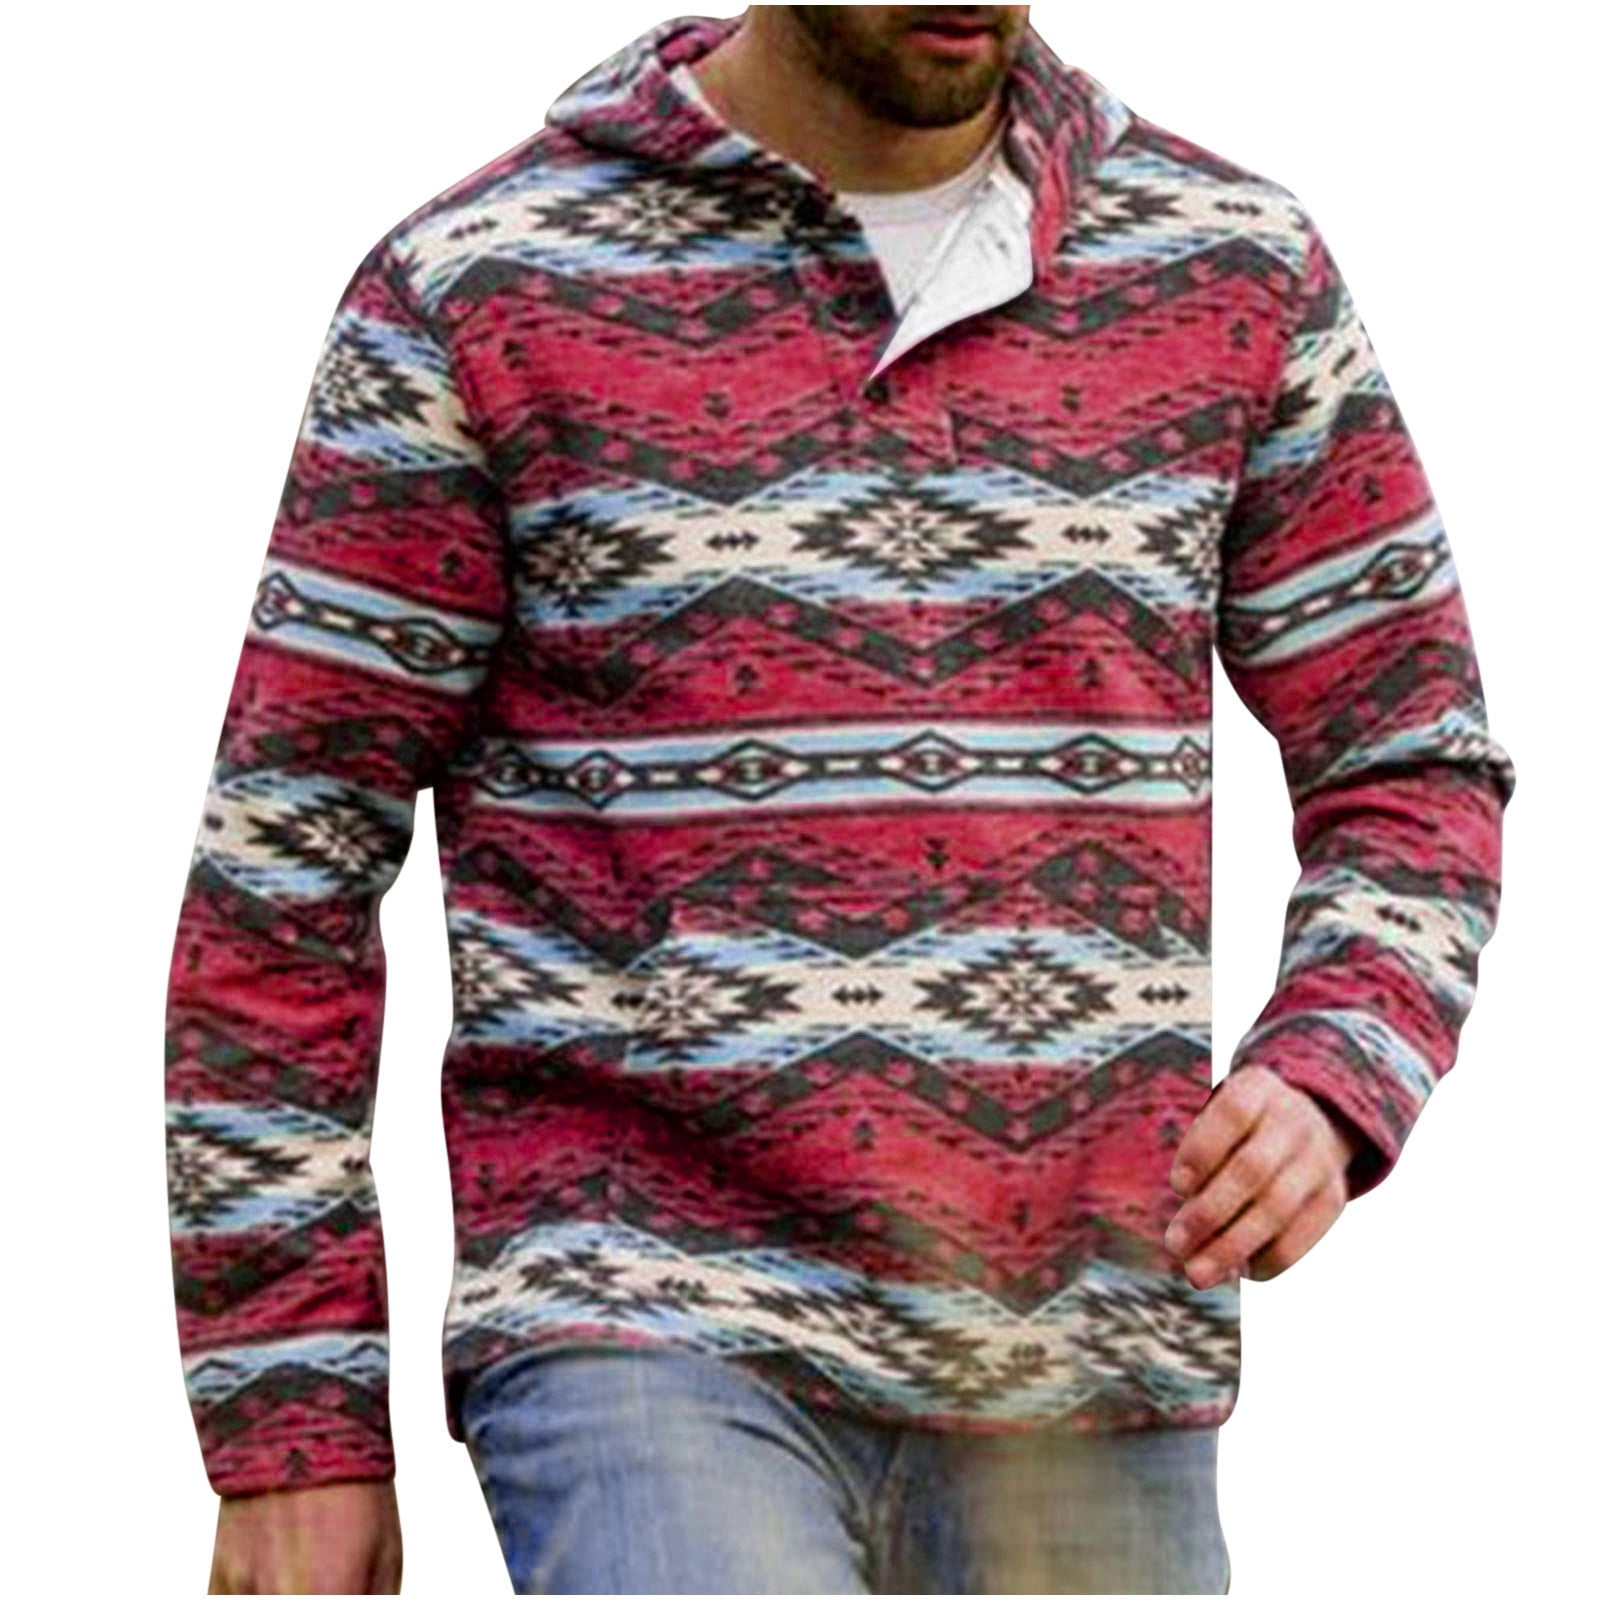 Vintage Men's Sweatshirt - Red - M